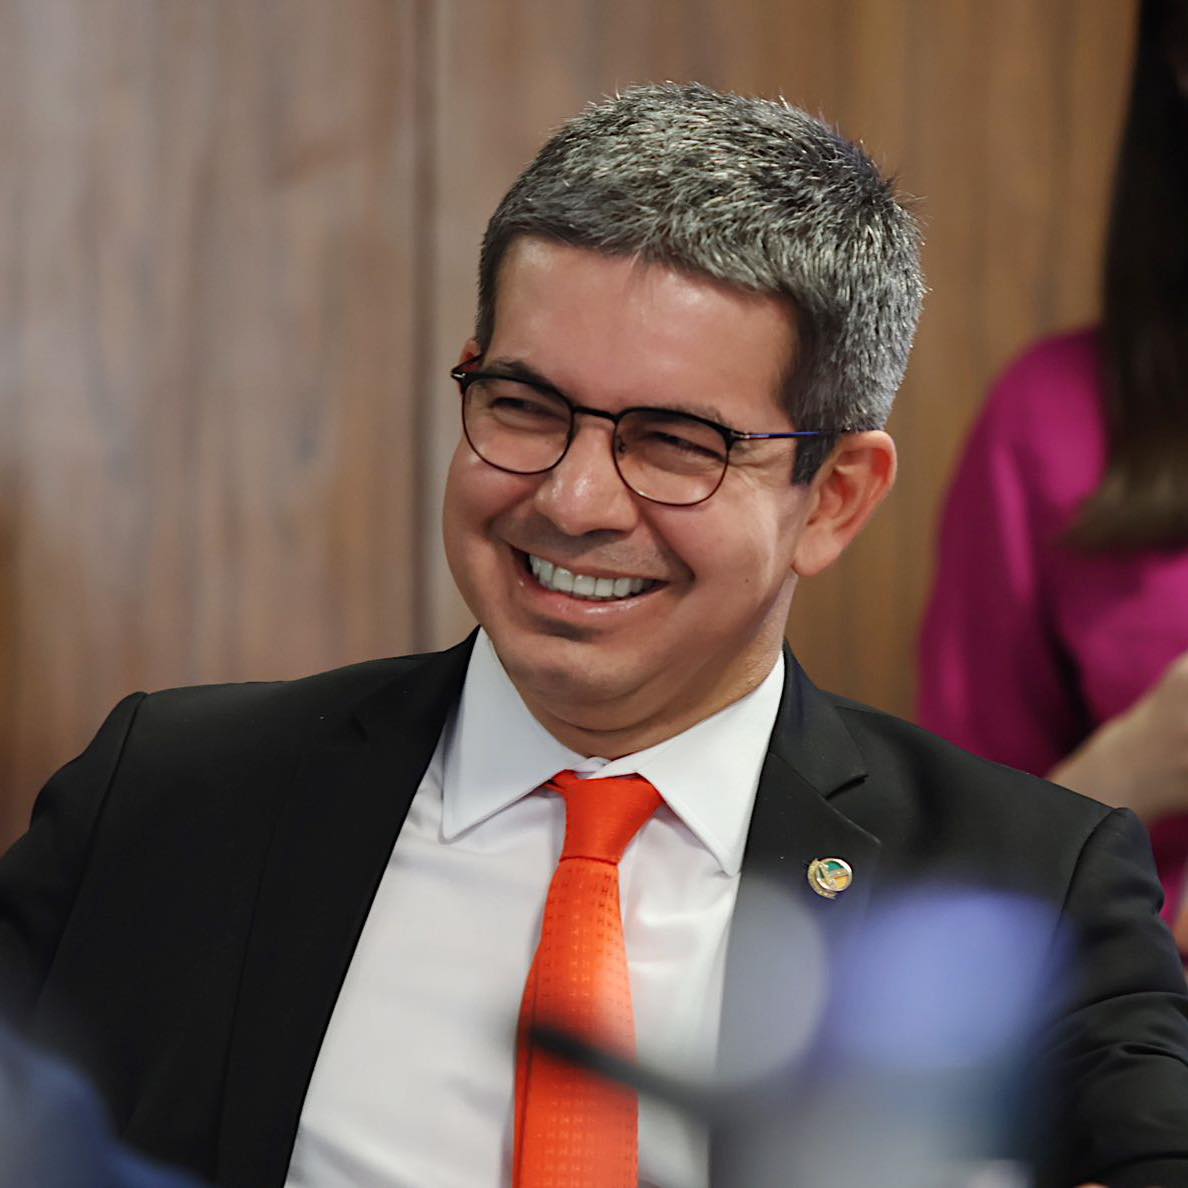 Senador Randolfe Rodrigues Declara Apoio ao STF Após Críticas Anteriores